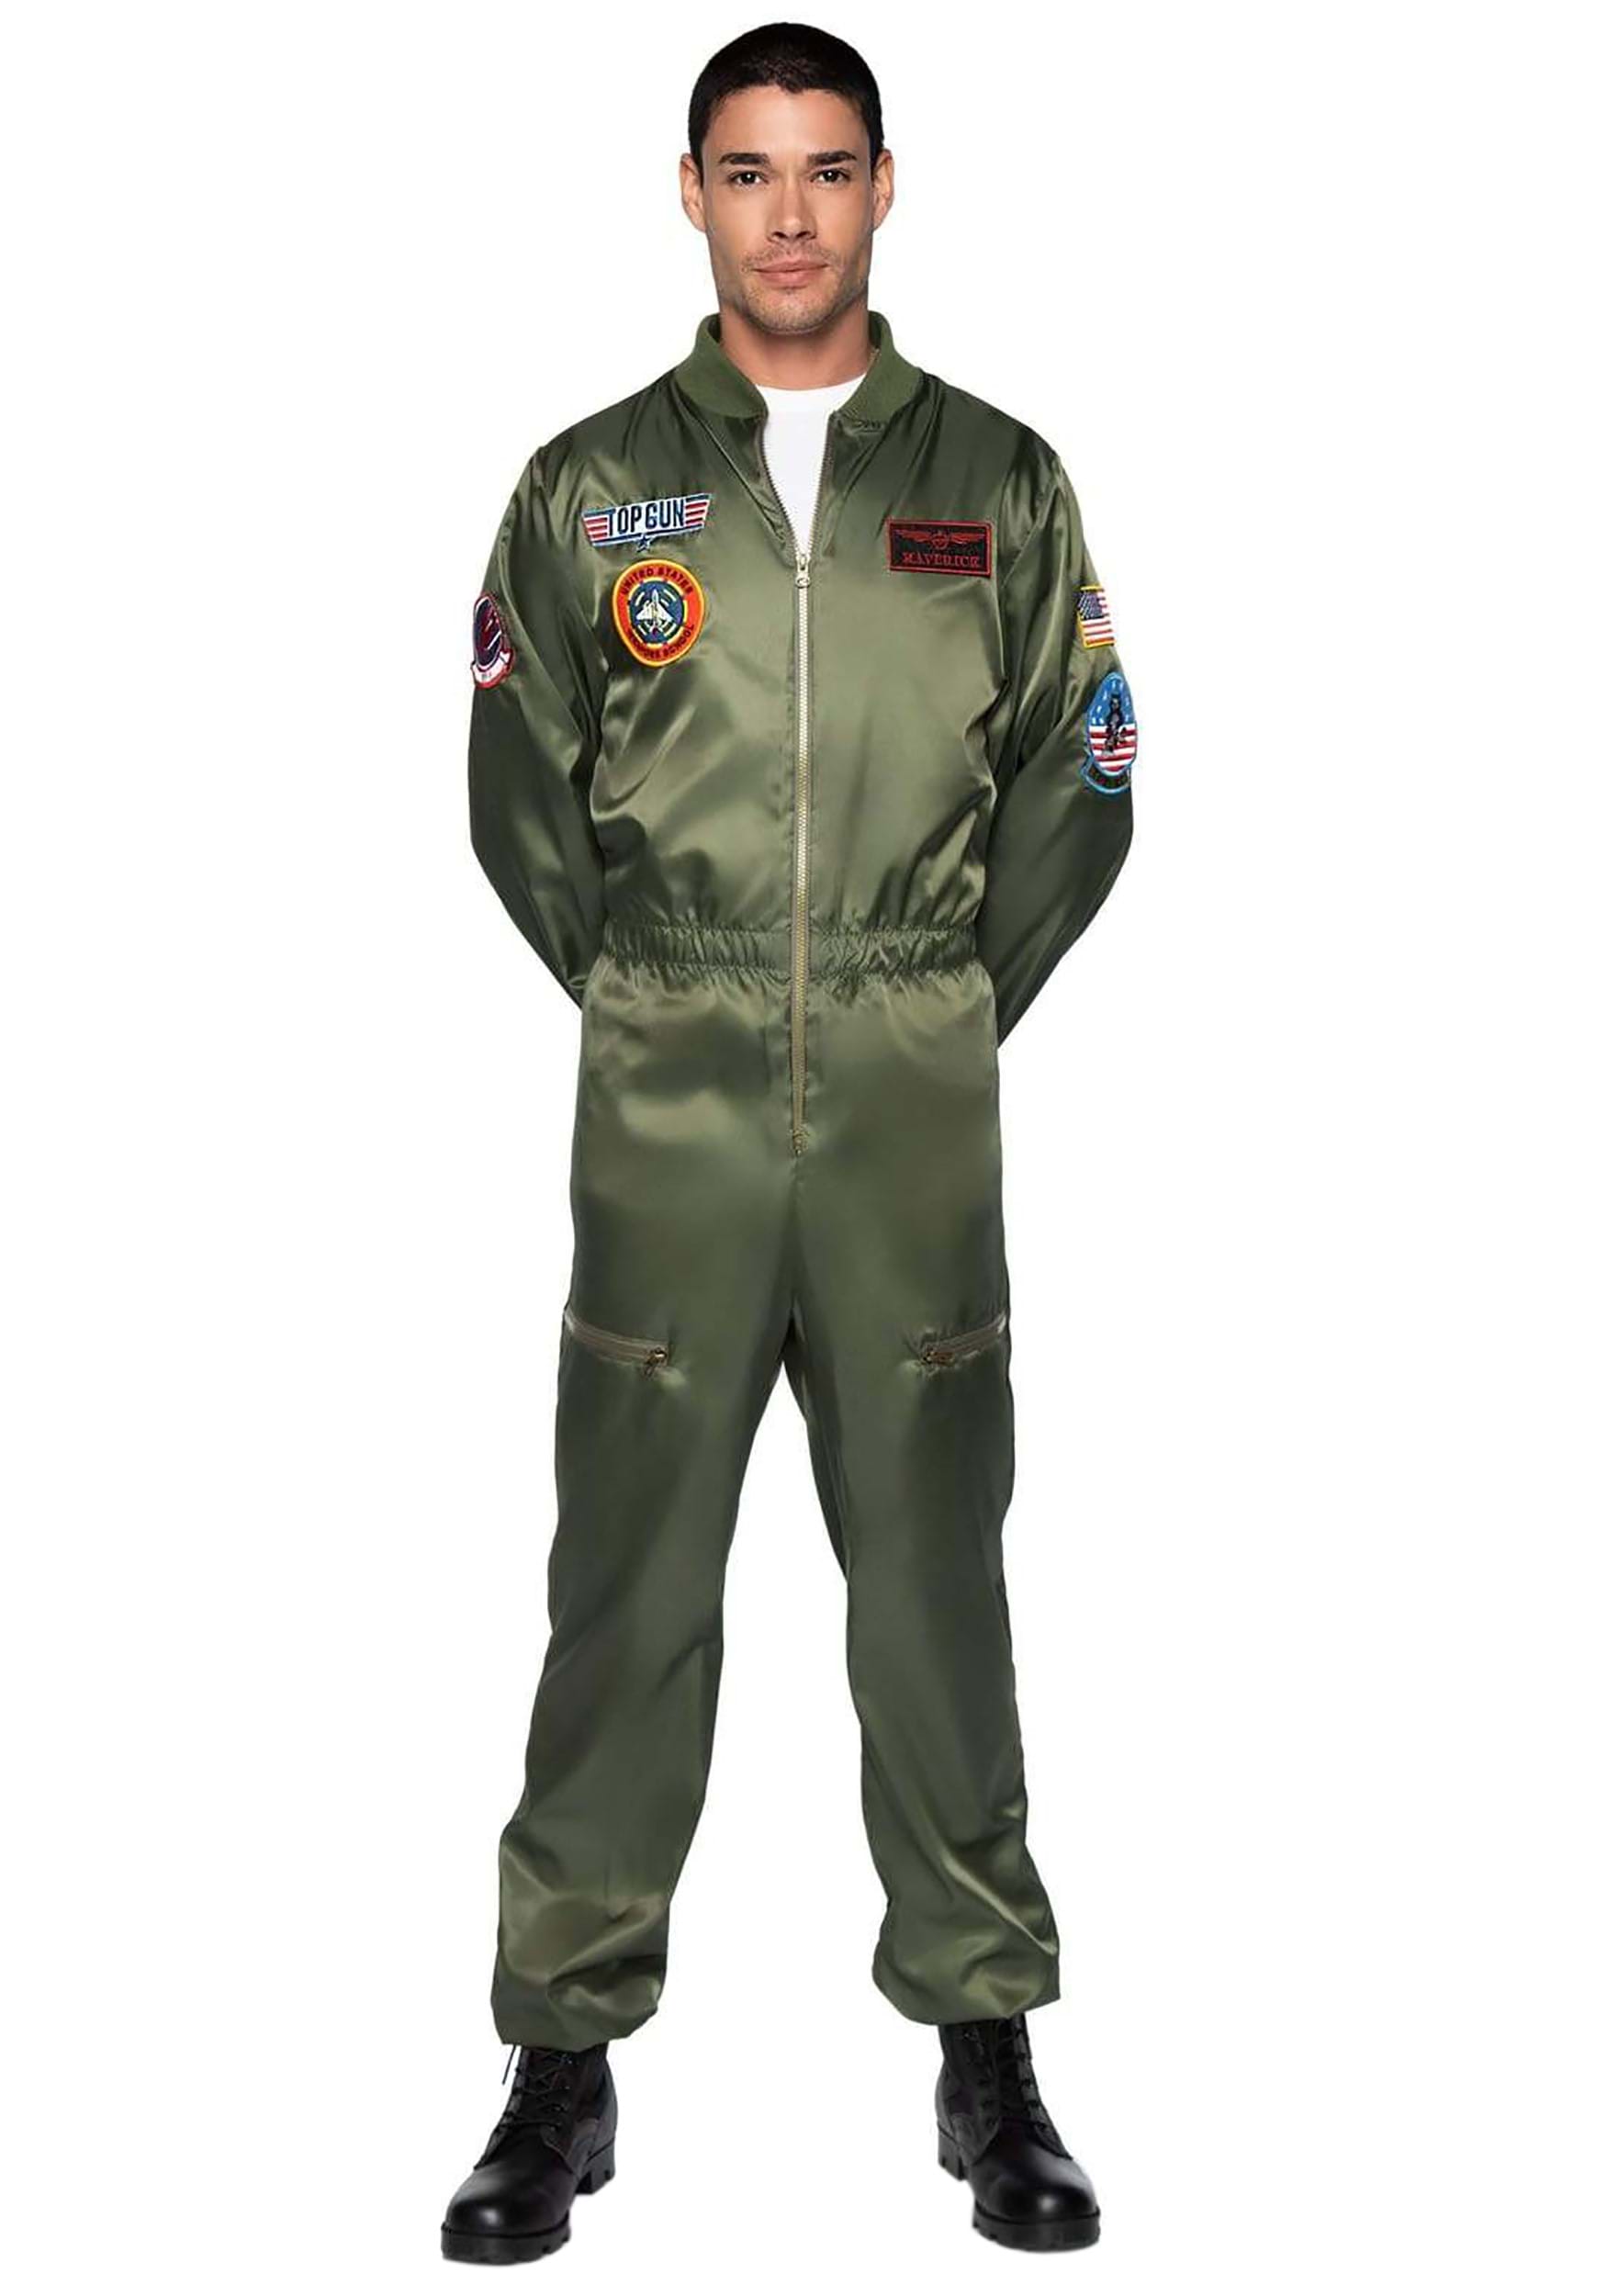 https://images.fun.com/products/65380/1-1/top-gun-mens-flight-suit-costume-update.jpg